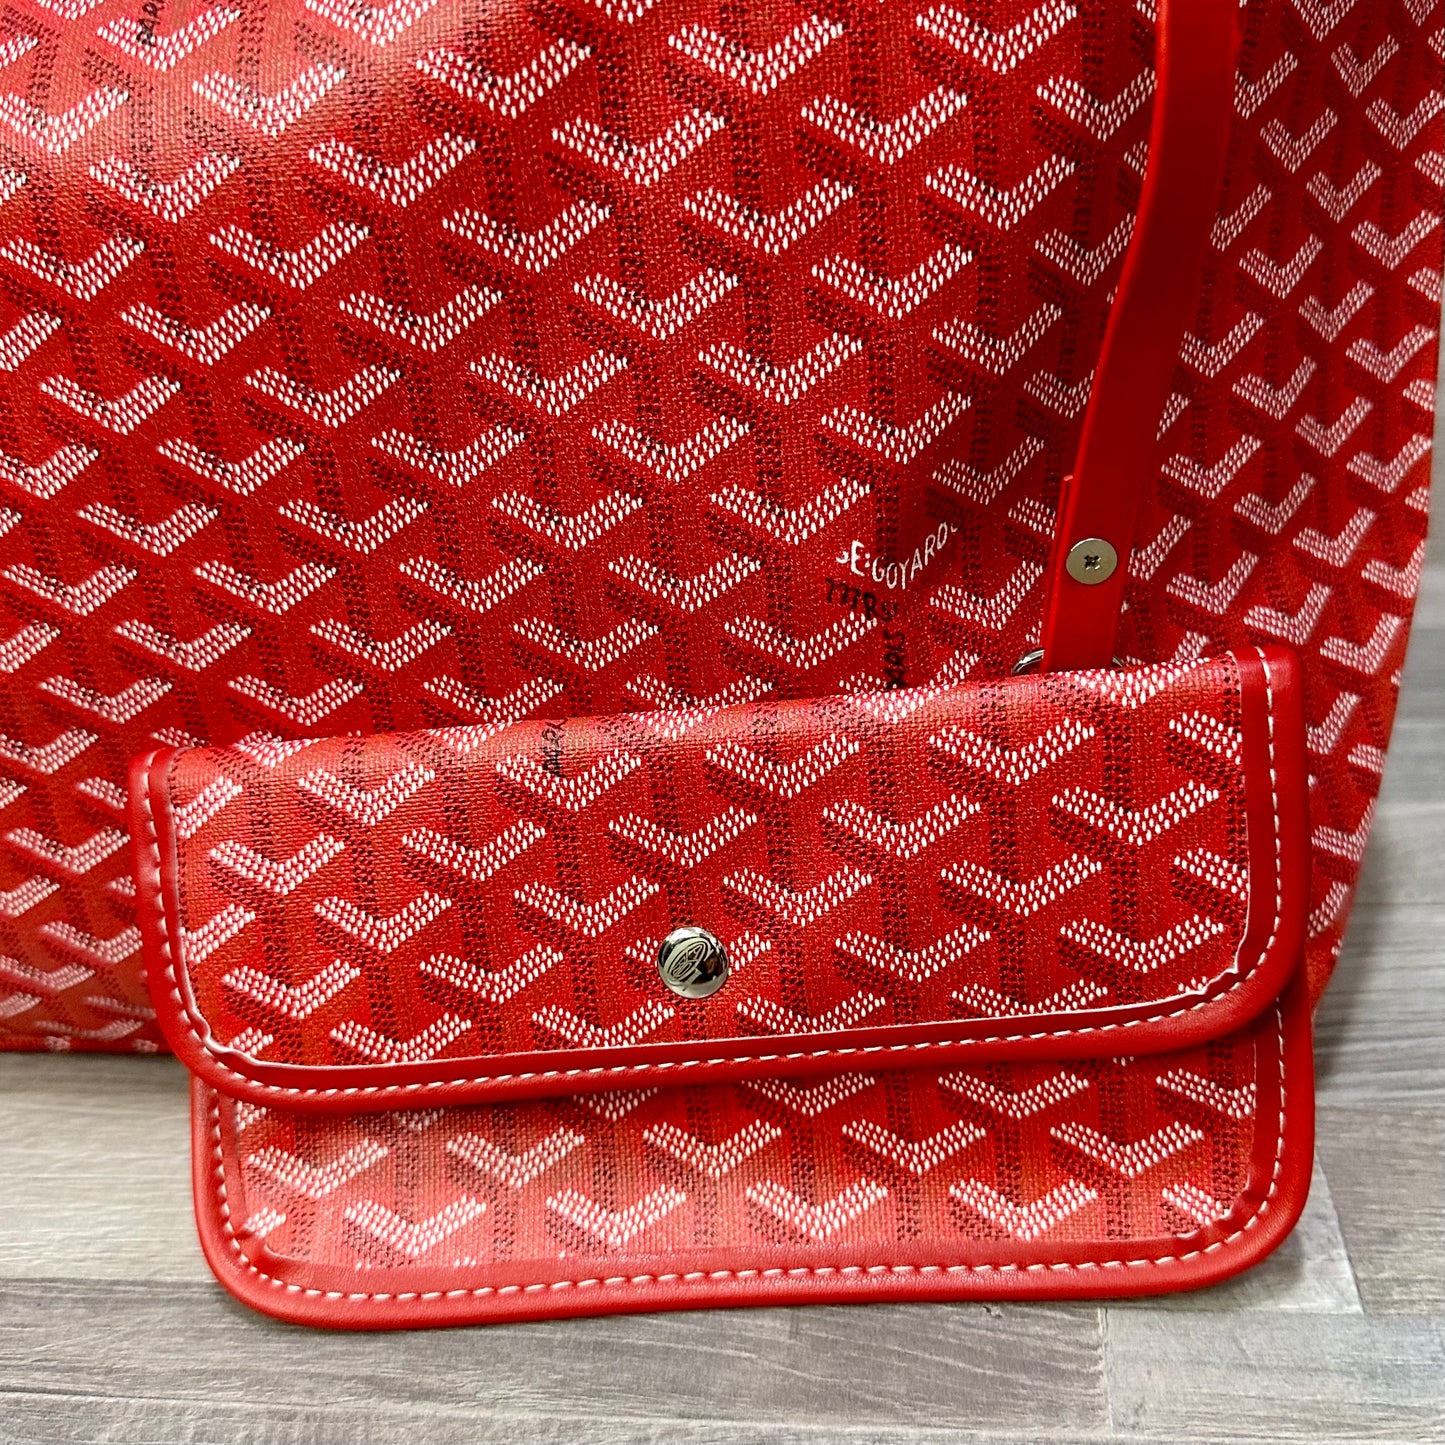 Goyard Handbag Red bags